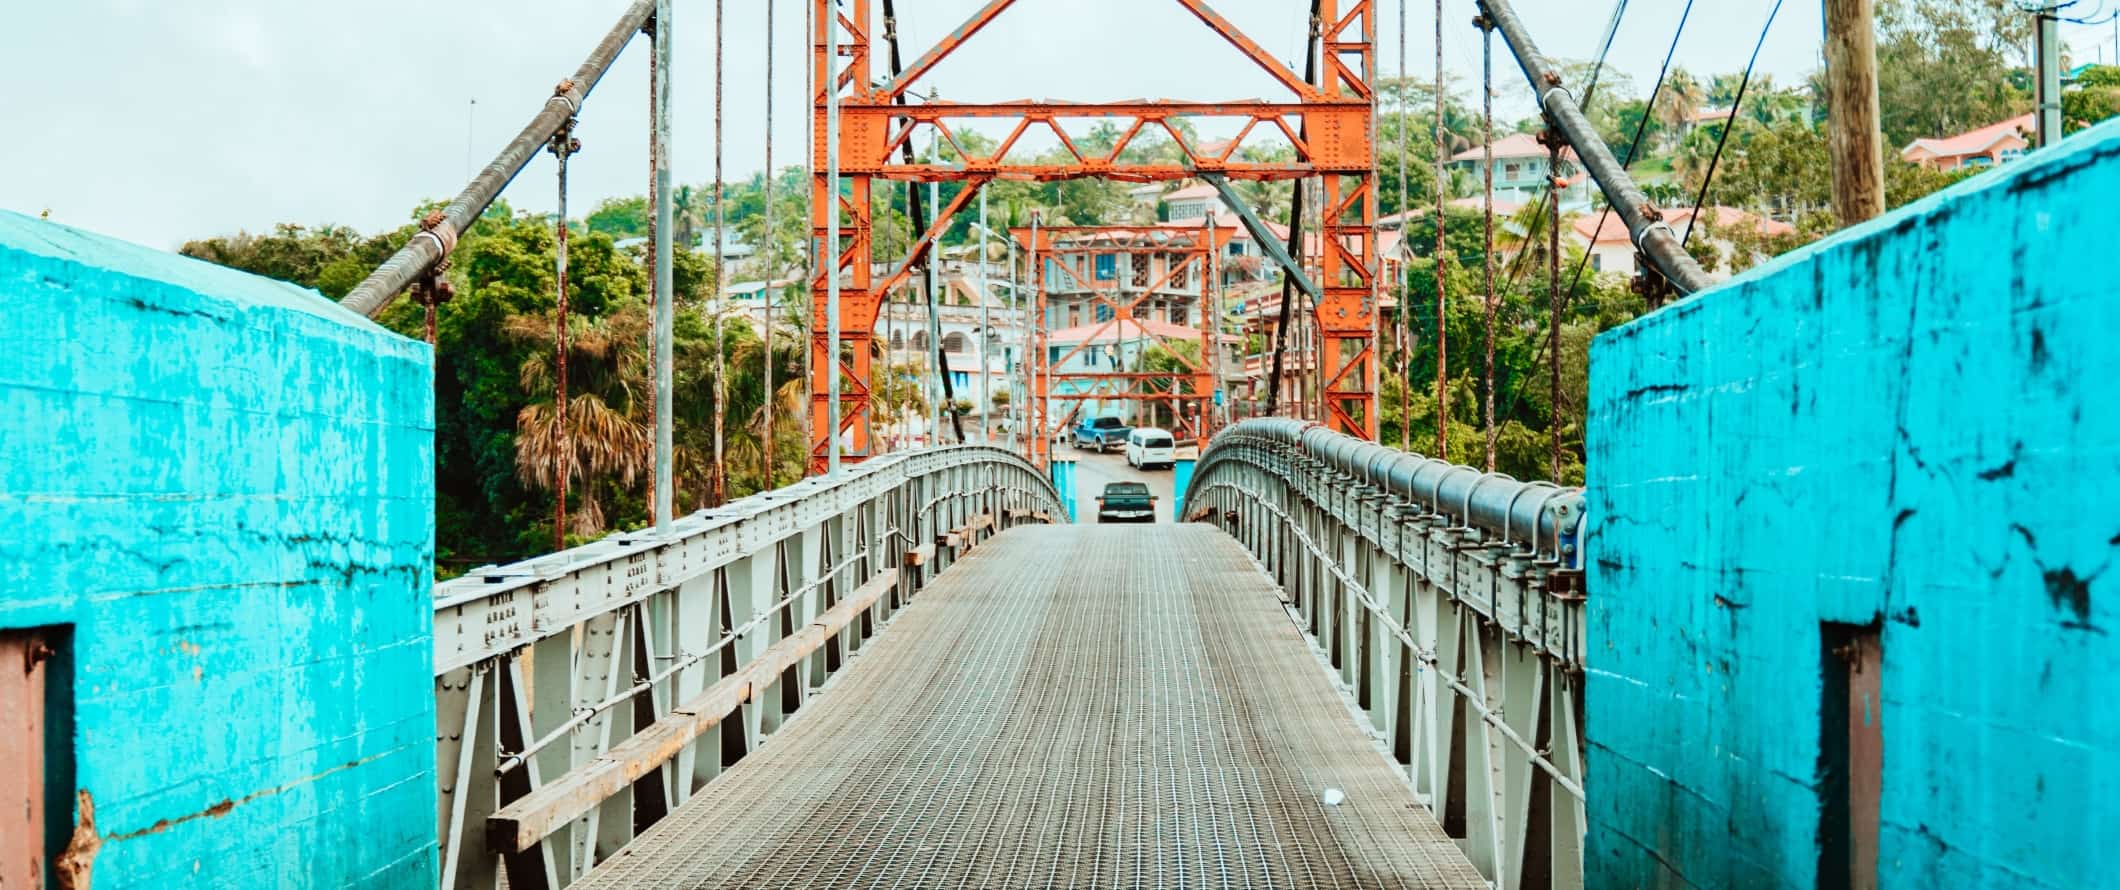 Metal bridge with bright blue walls and a car driving over it in San Ignacio, Belize